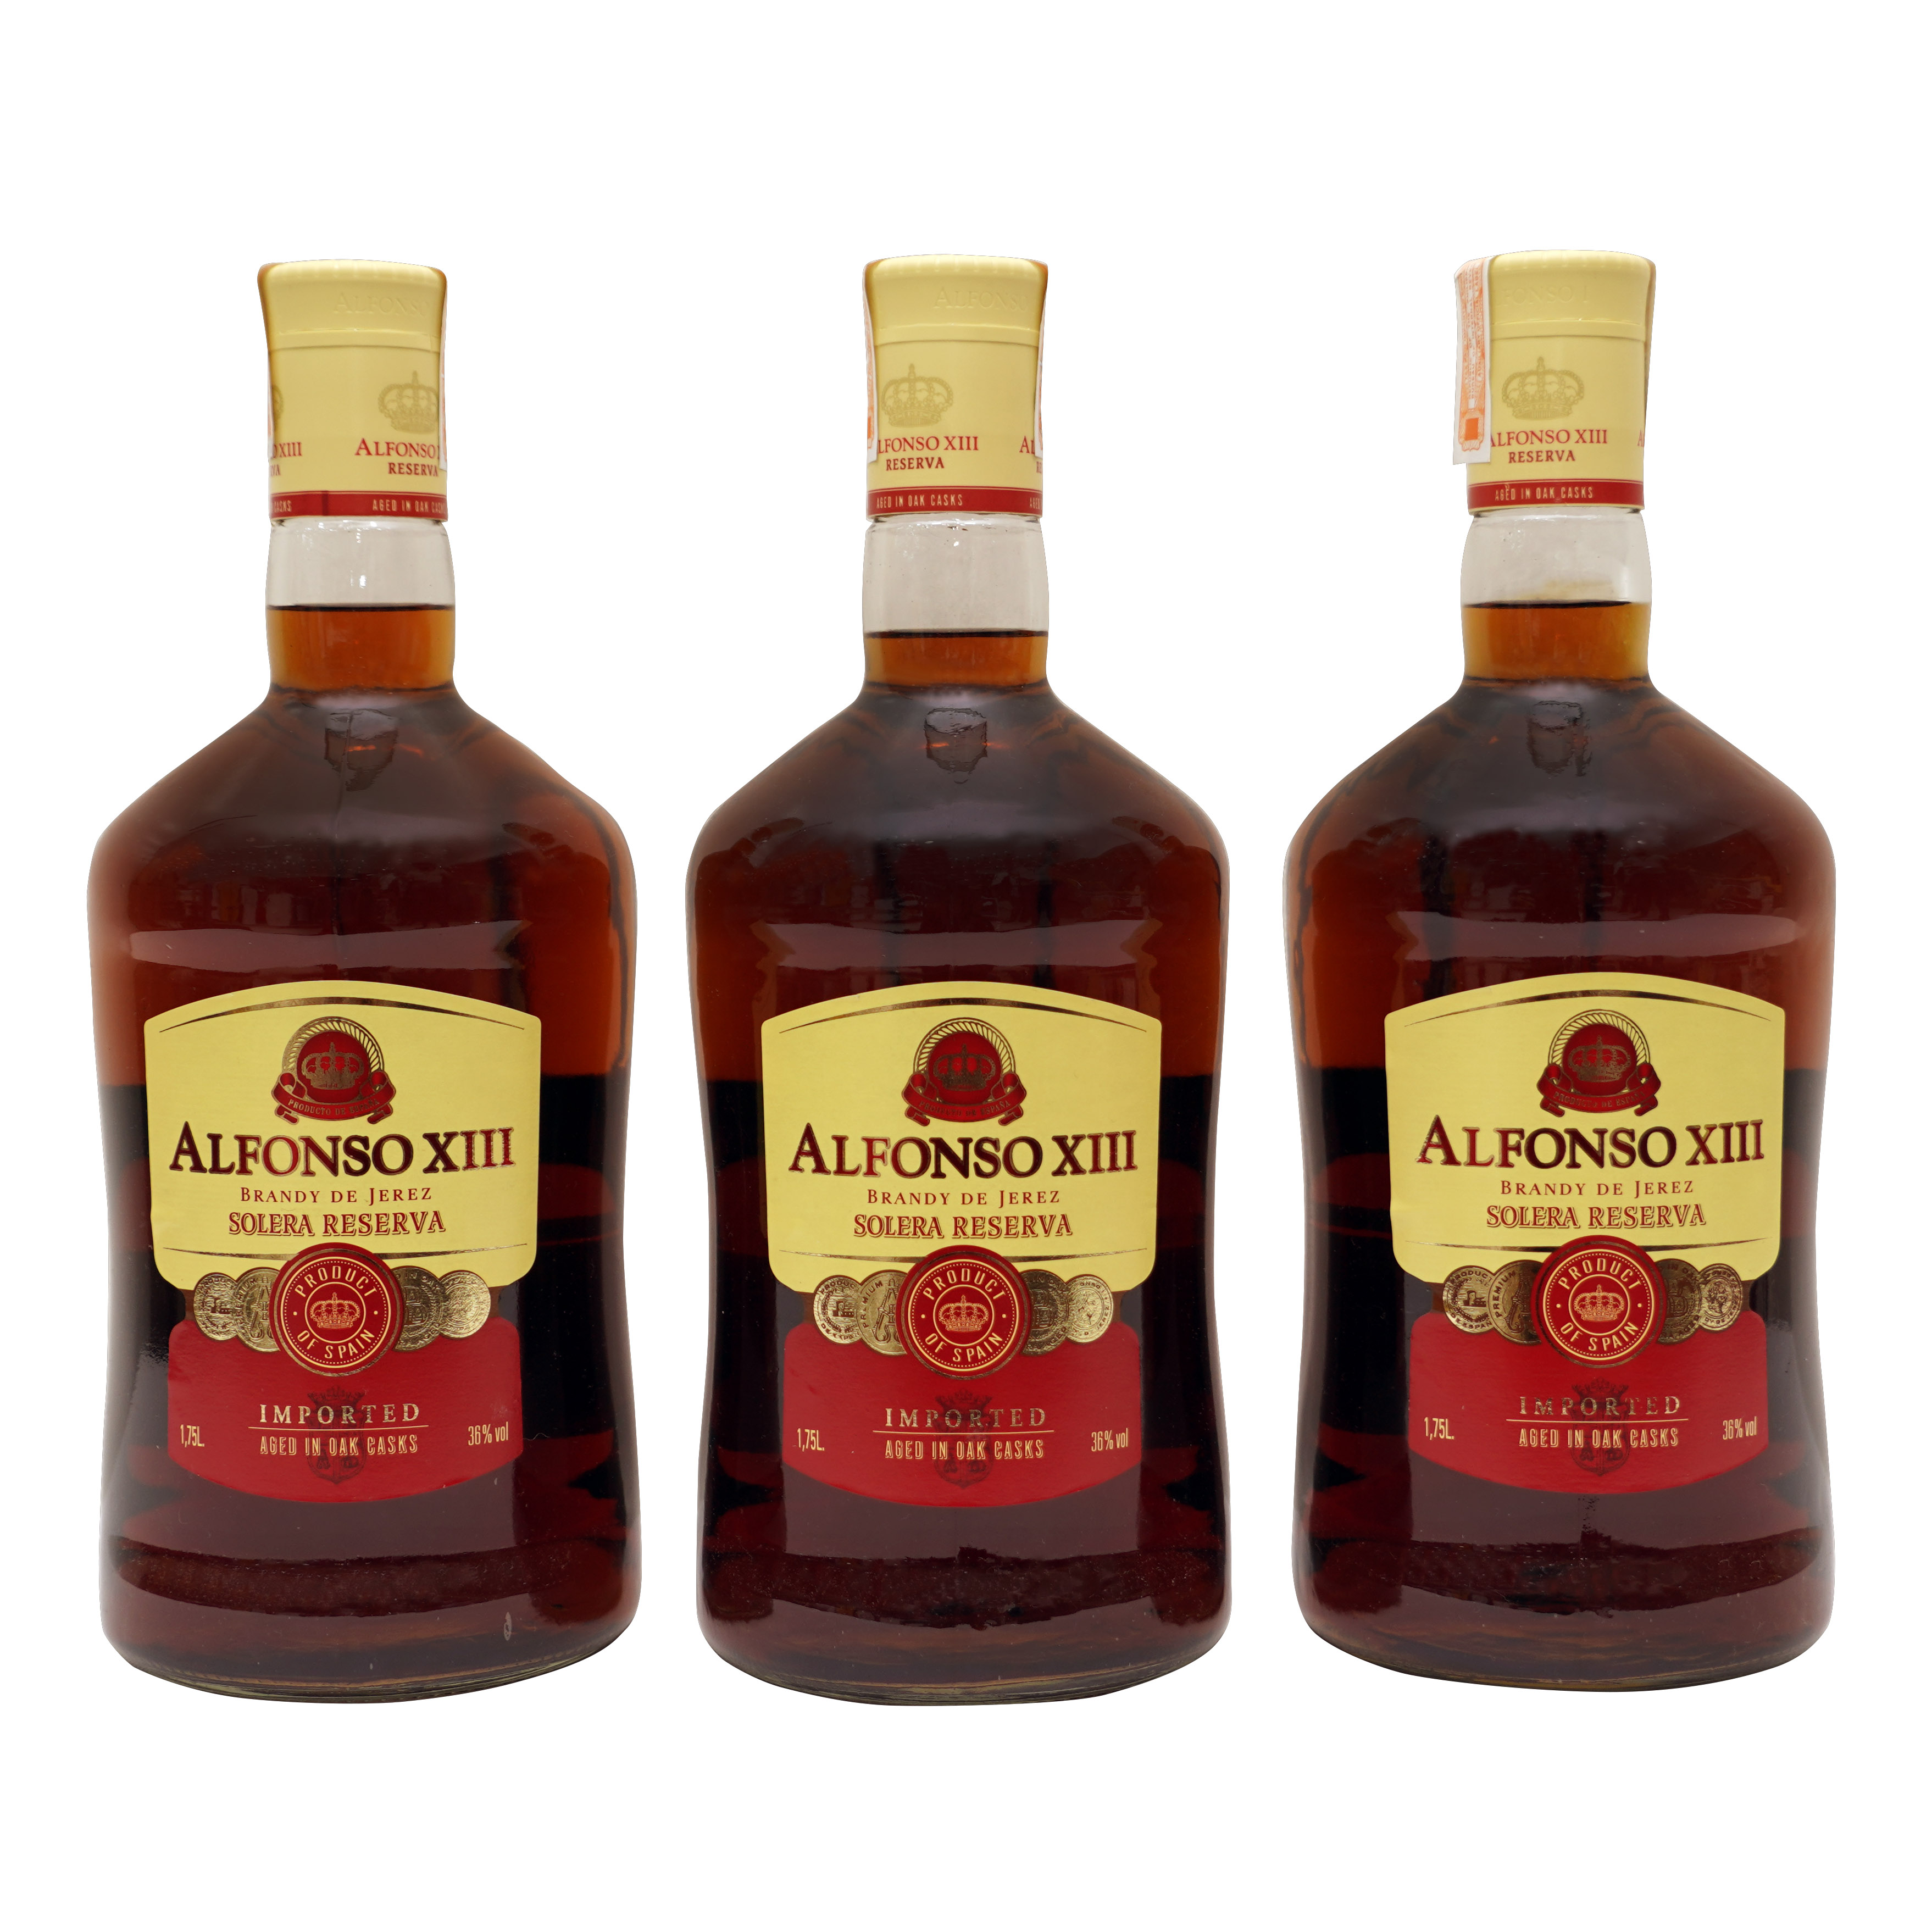 Alfonso XIII Solera Reserva (3 bottles, 1.75ml each)